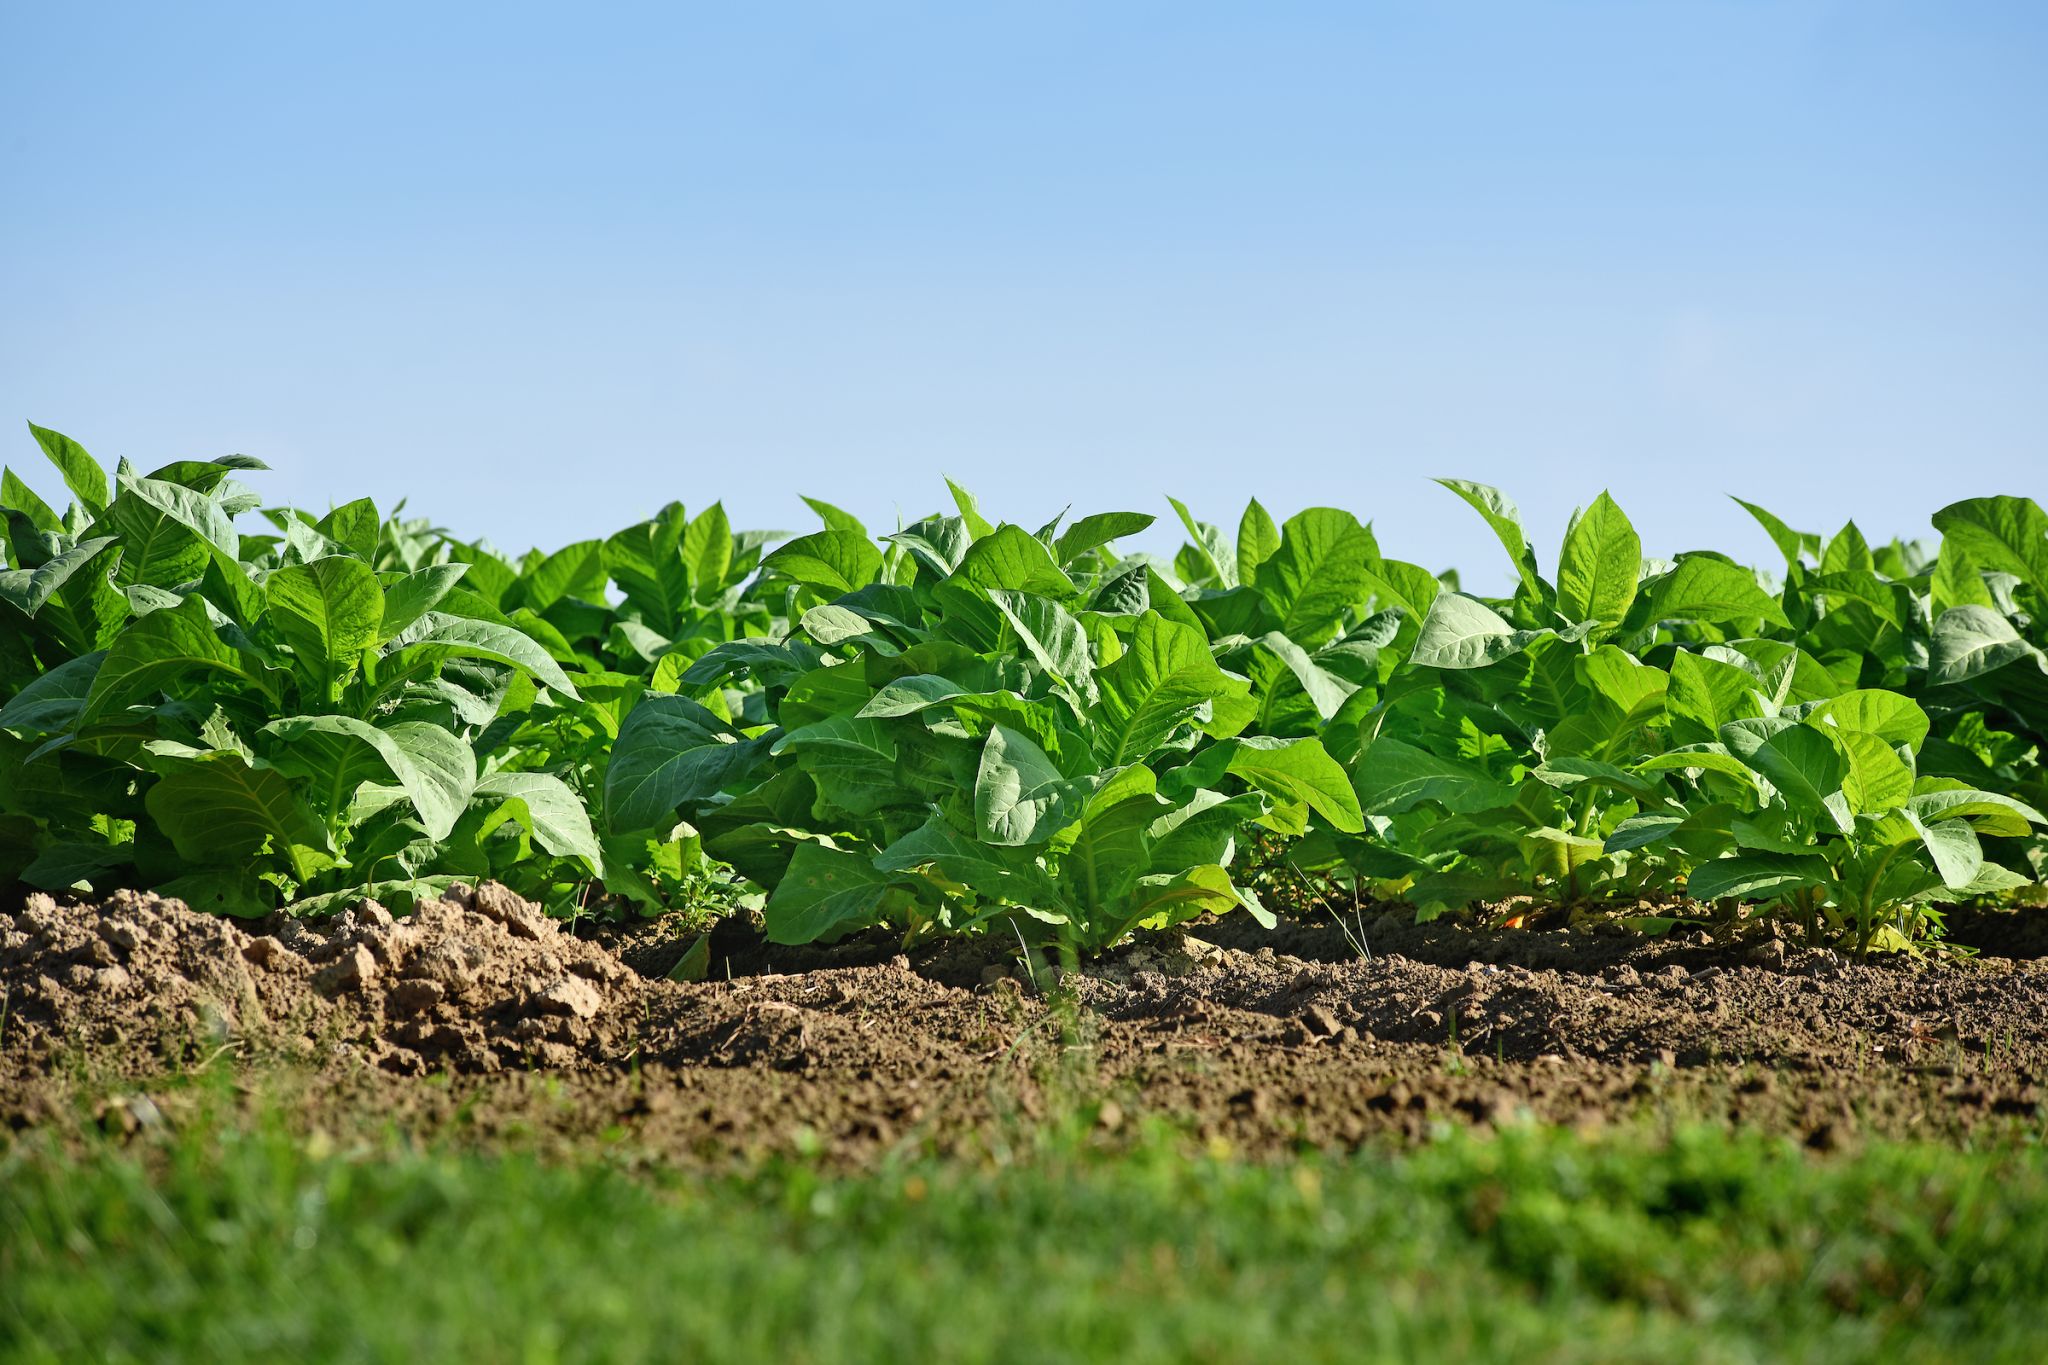 Most tobacco varieties grown in NC originated at NC State